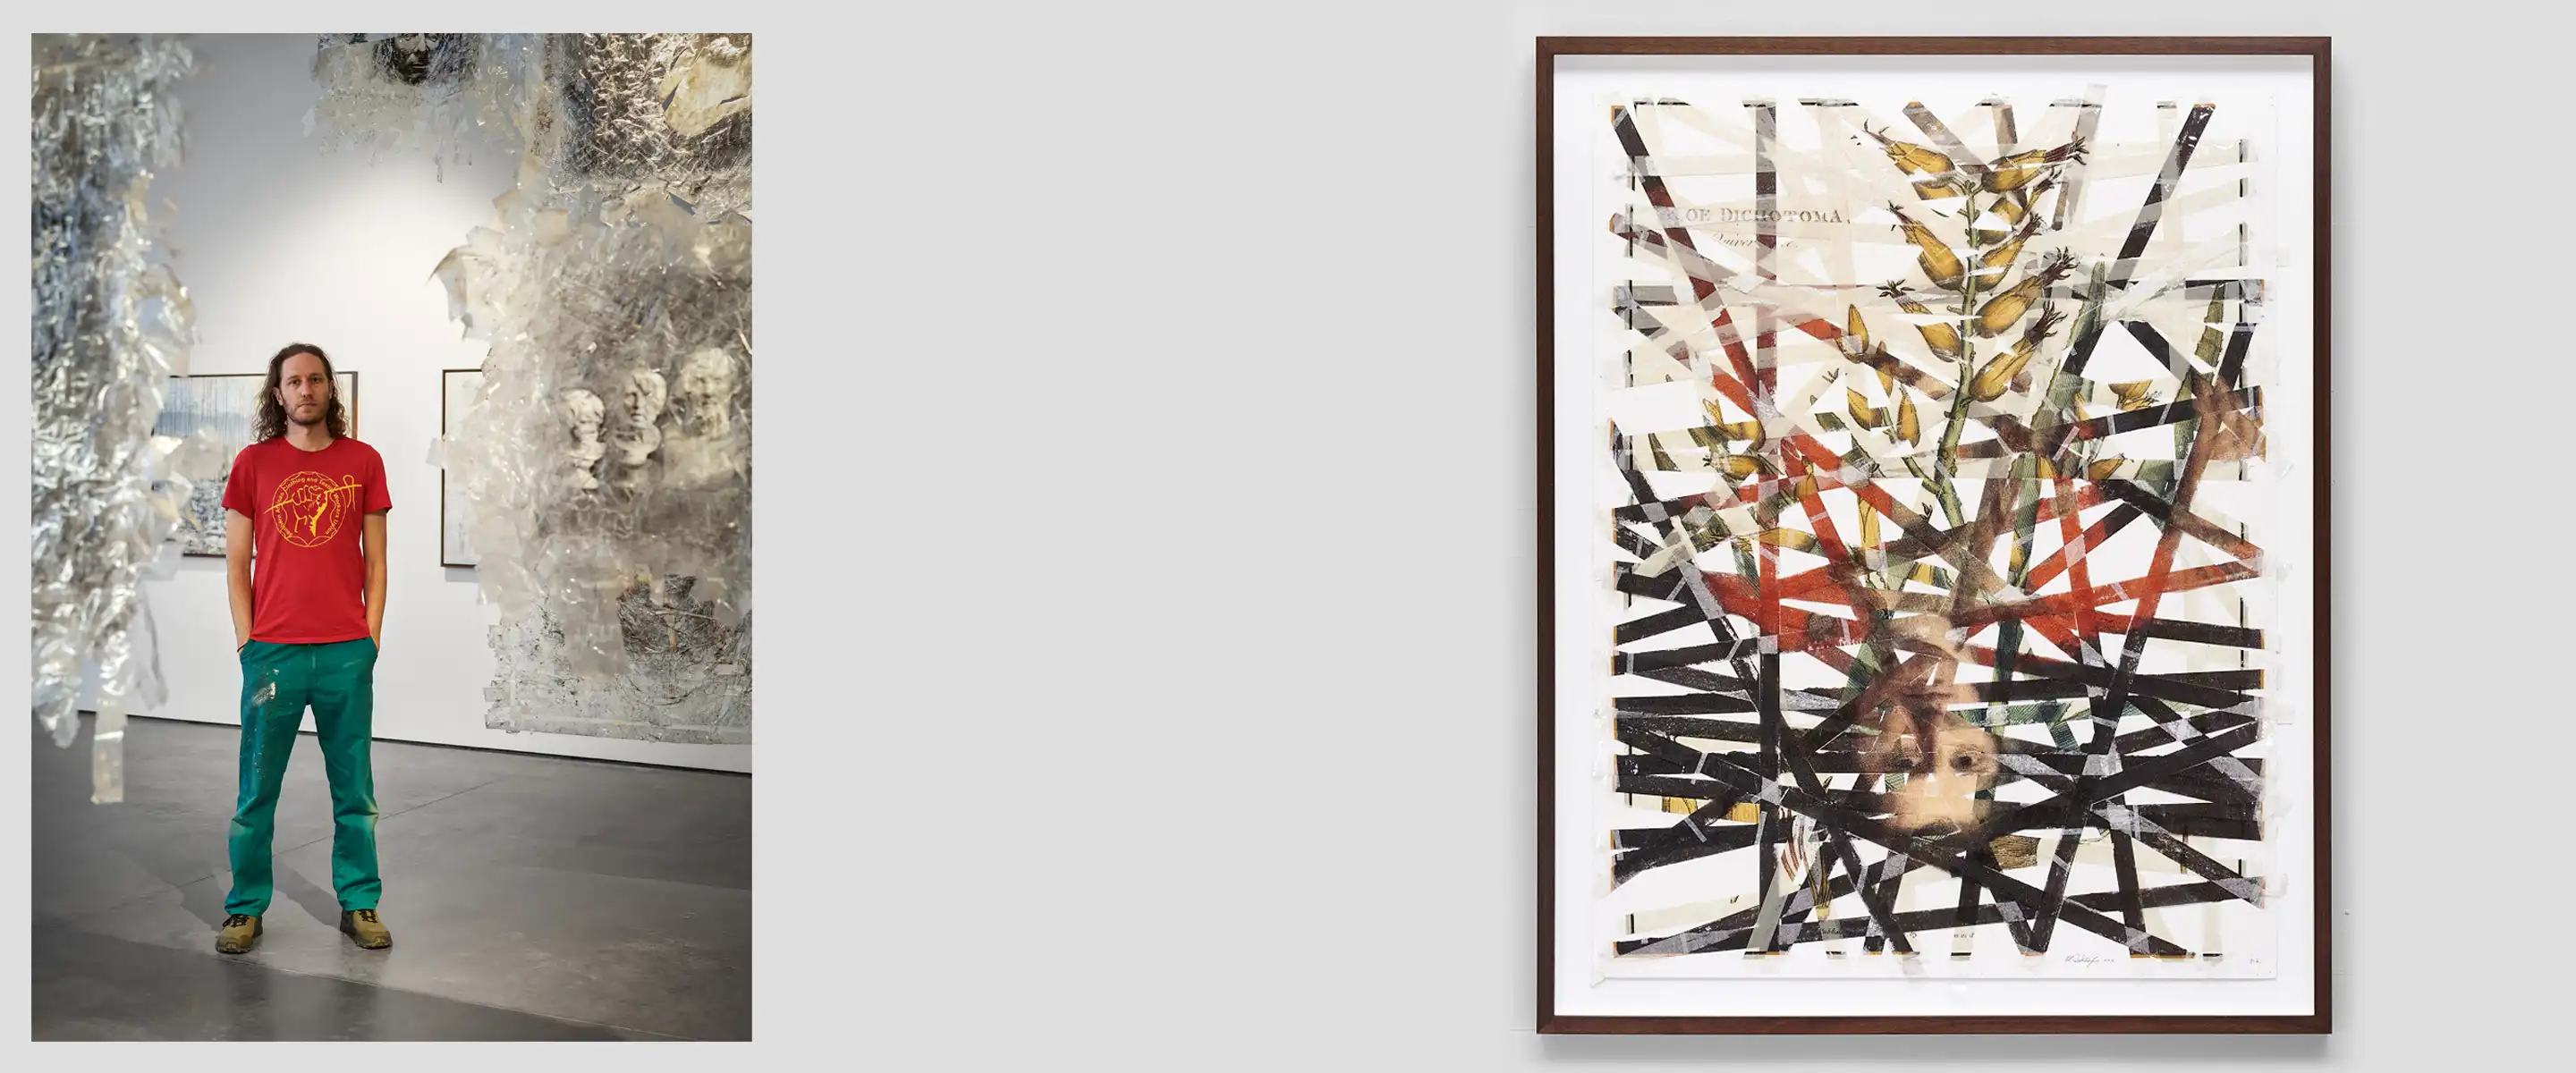 Image 1: Mikhael Subotzky portrait. Image 2: Mikhael Subotzky's work 'Sticky Tape Transfer 13, Quiver Tree / Robert Jacob Gordon,' 2015. 